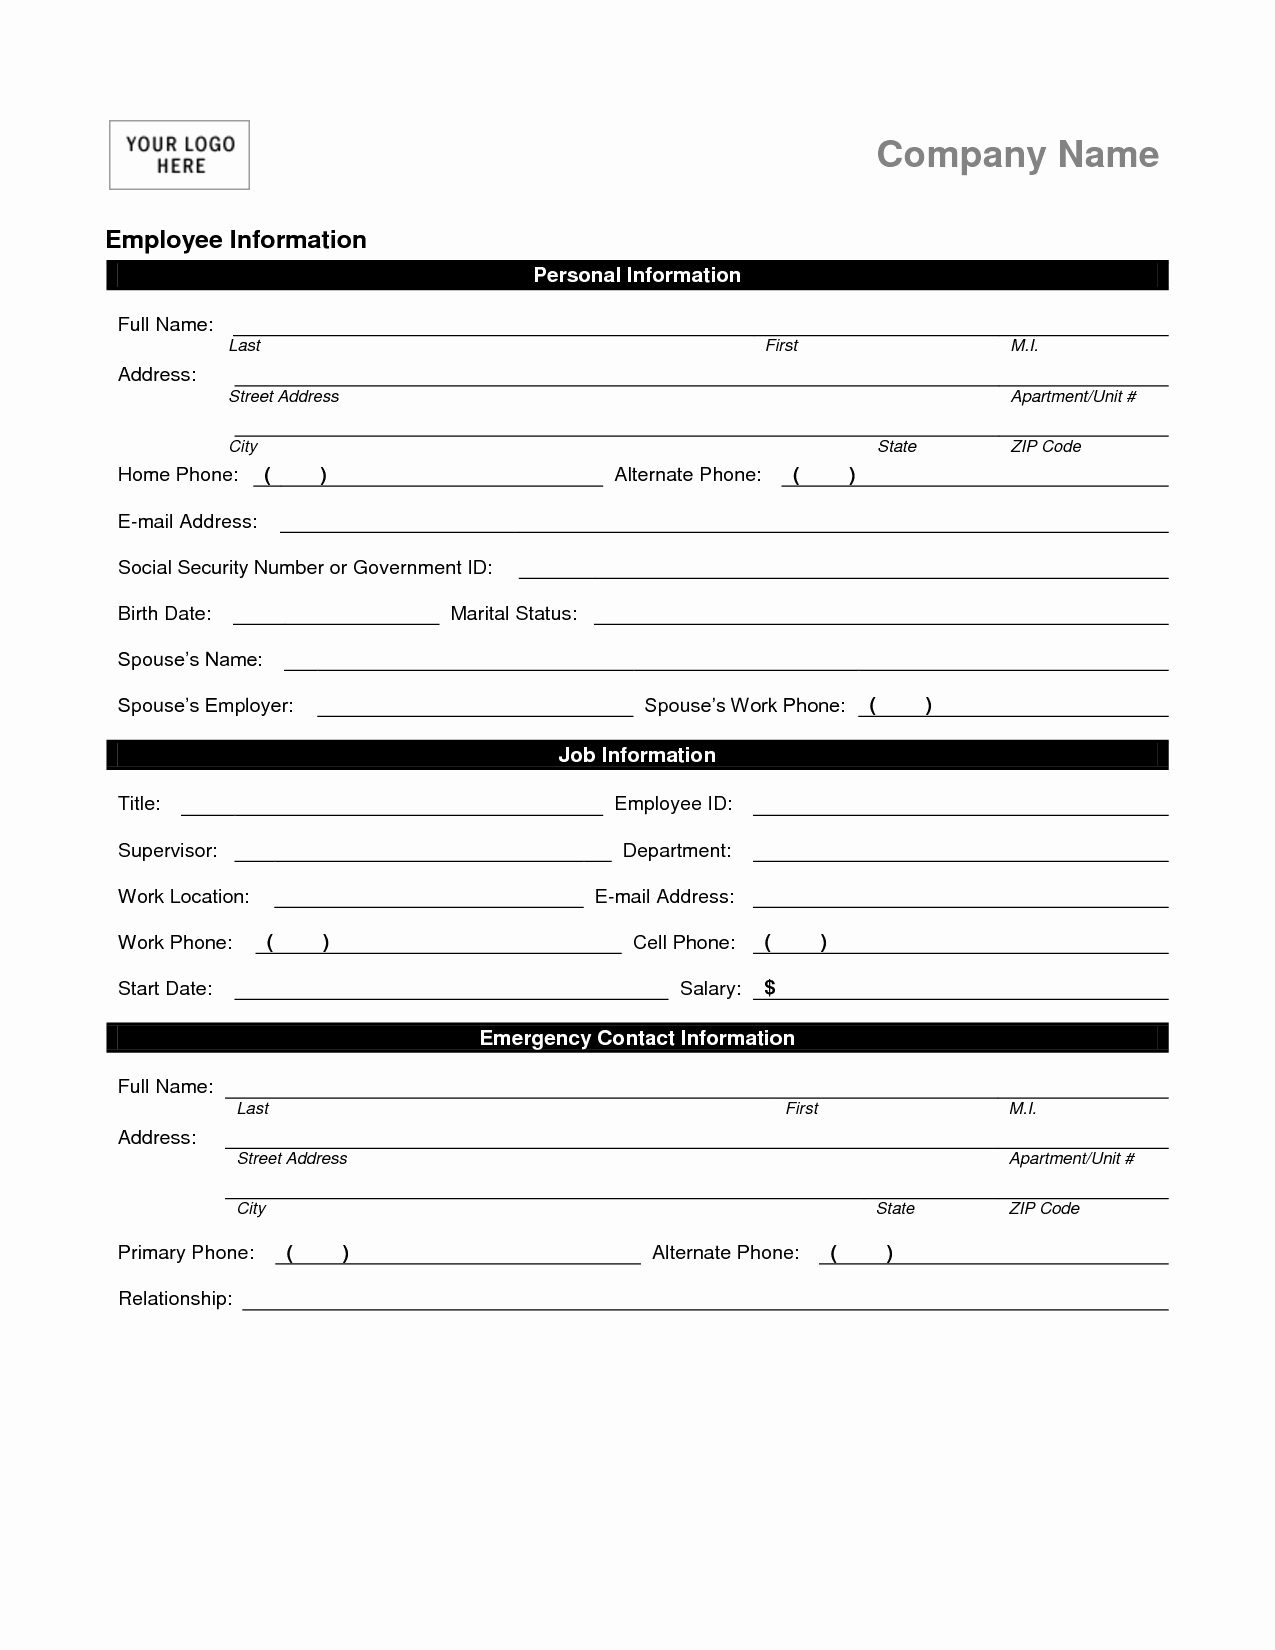 Personal Information Sheet Template Beautiful Employee Personal Information form Template